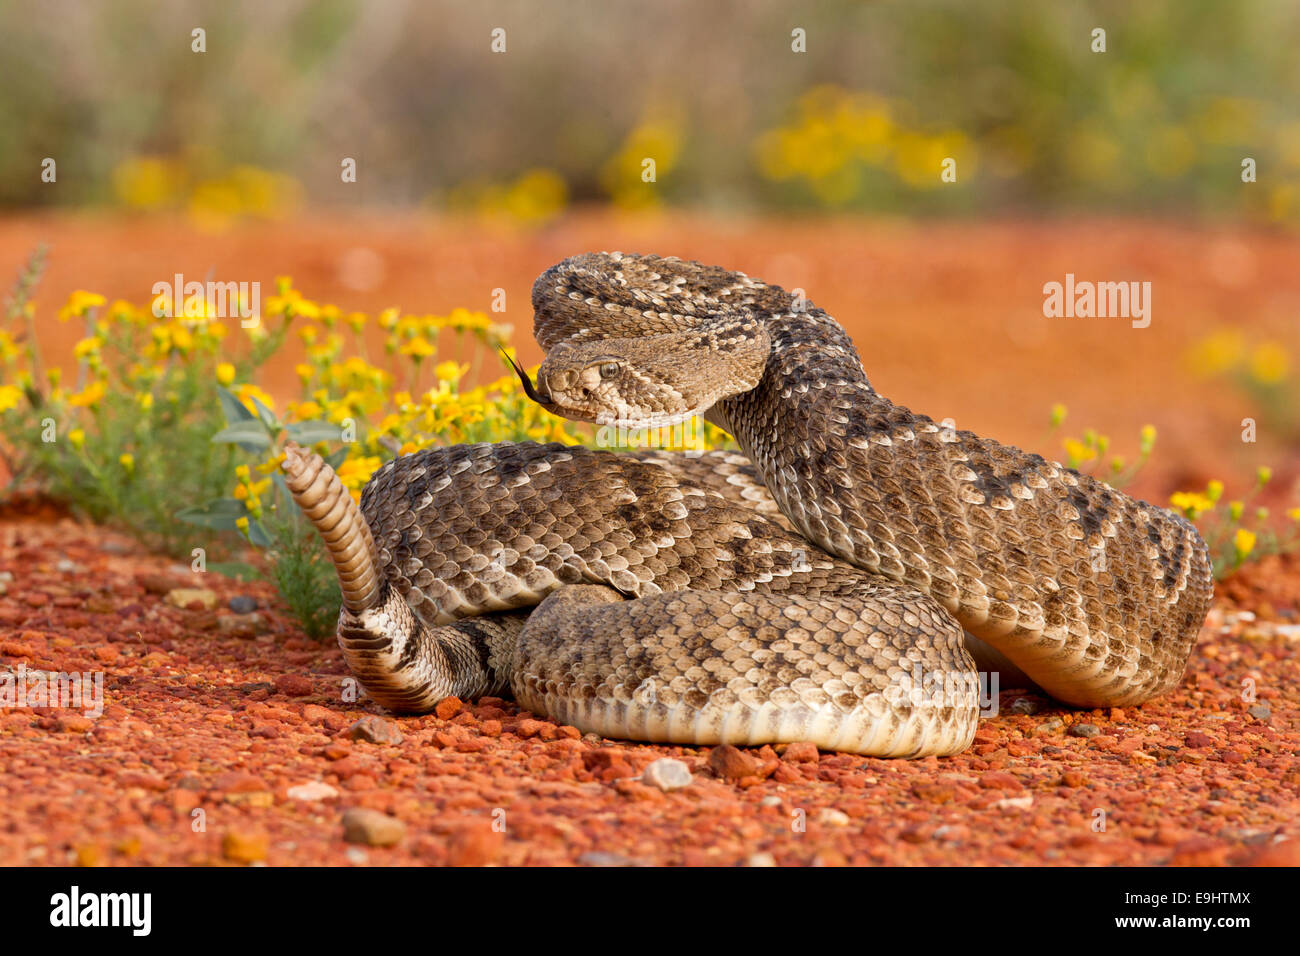 Western diamondback rattlesnake in Texas Stock Photo